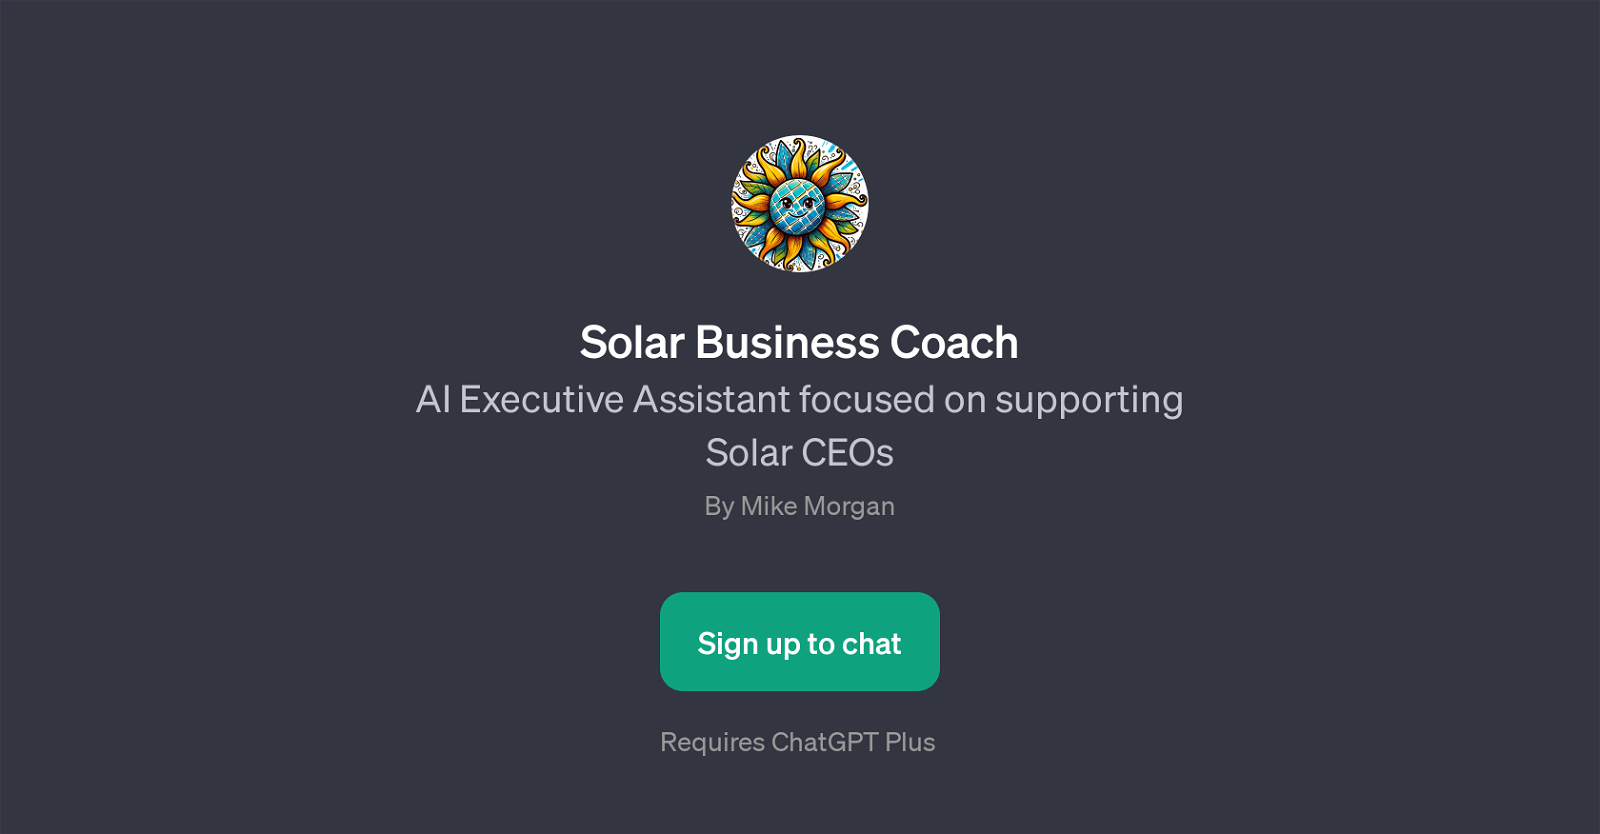 Solar Business Coach website